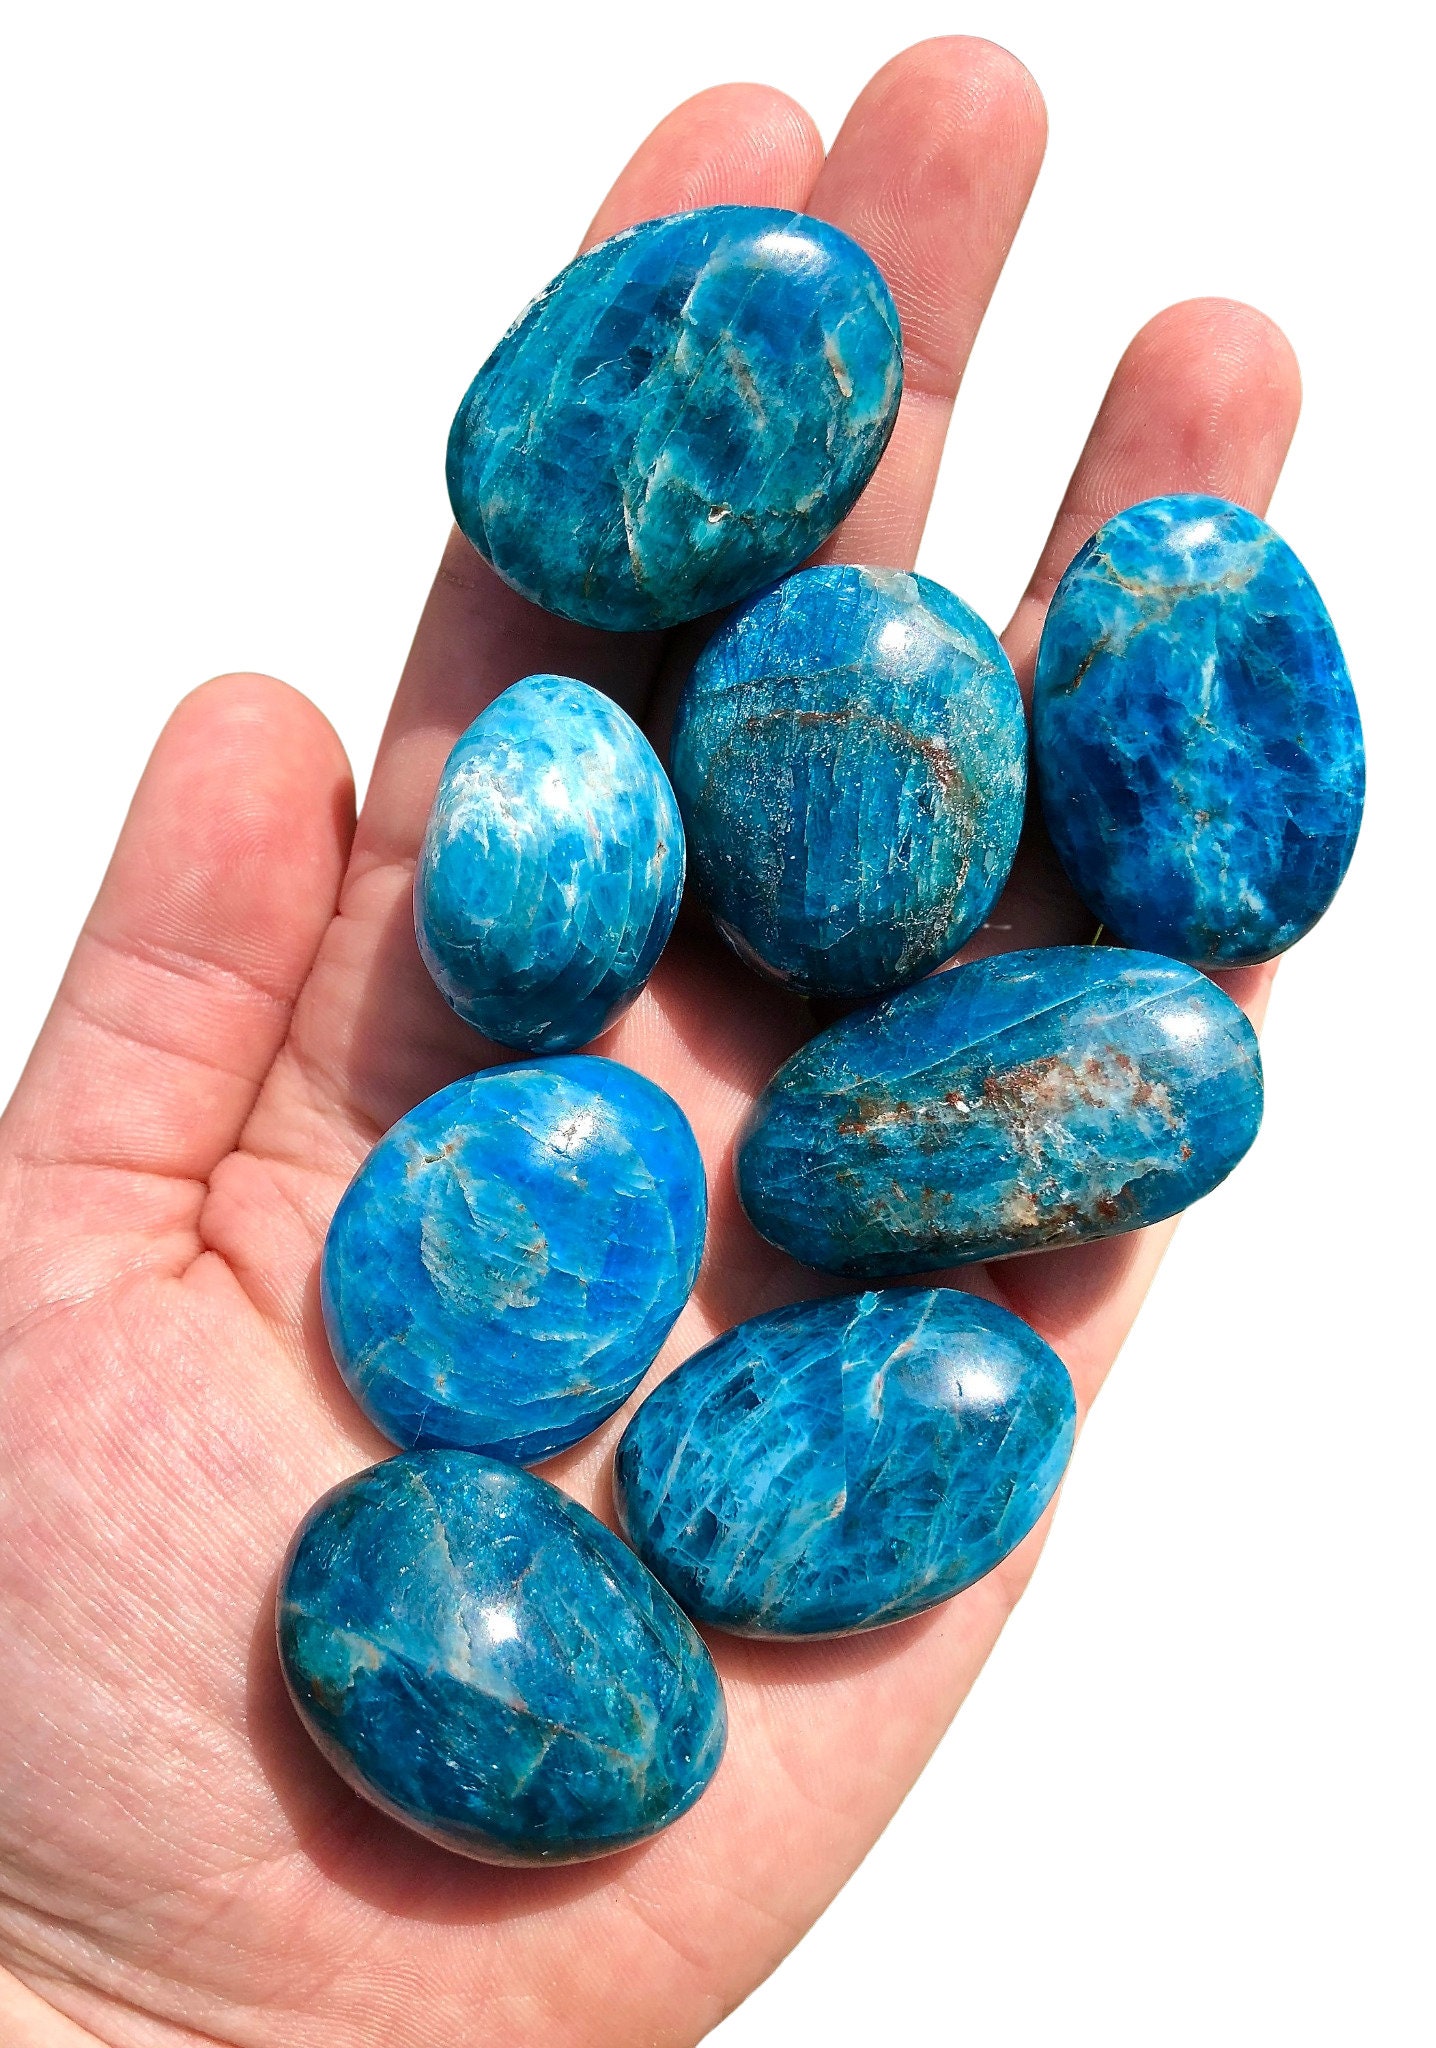 Meditation Stone E0700 BLUE APATITE Tumbled Stones-Healing Crystals,Unique Gift 